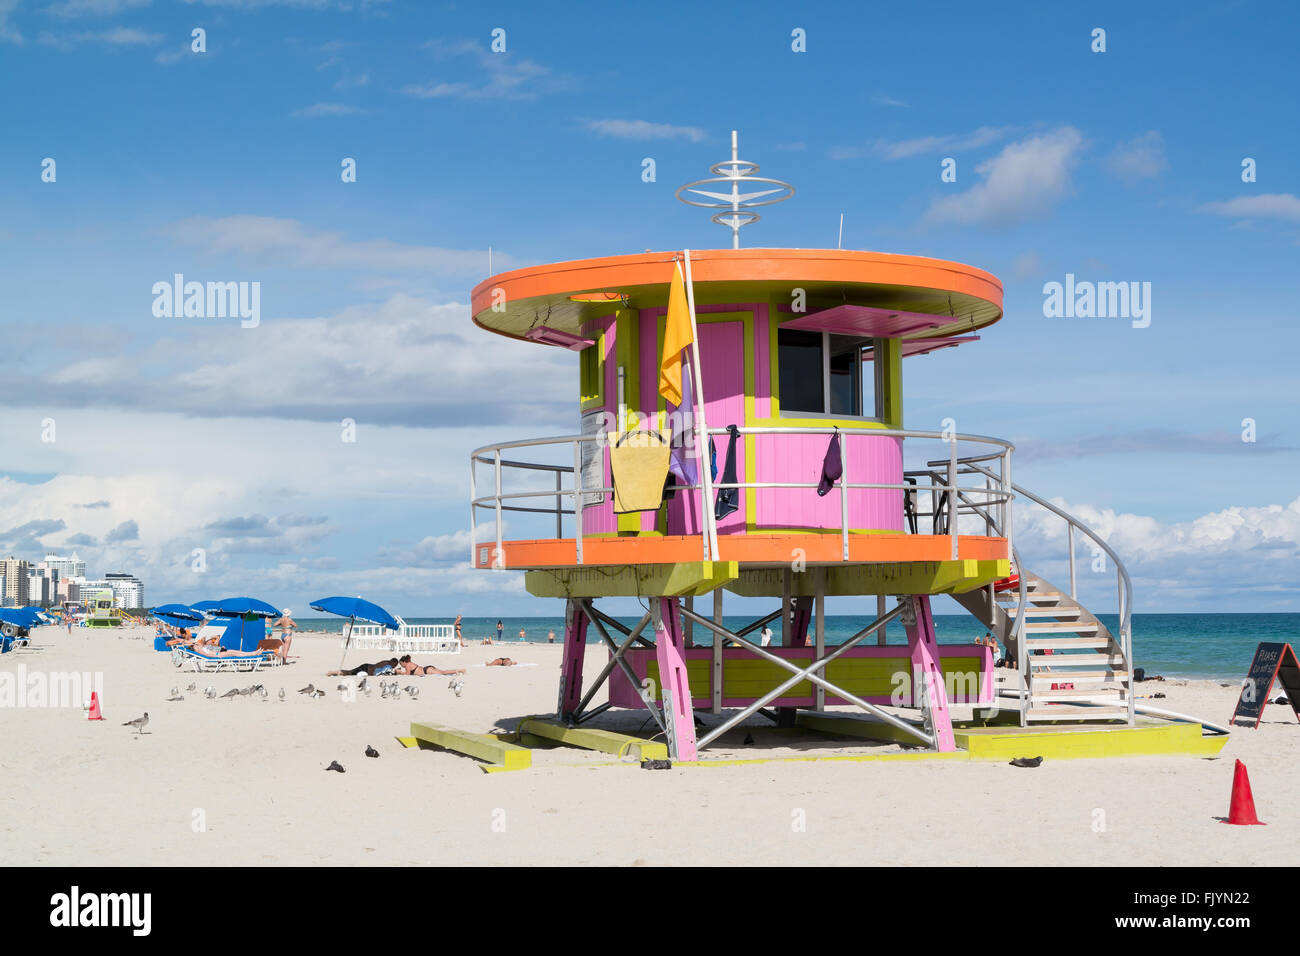 Station de garde la vie de South Beach de Miami Beach, Floride, USA Banque D'Images